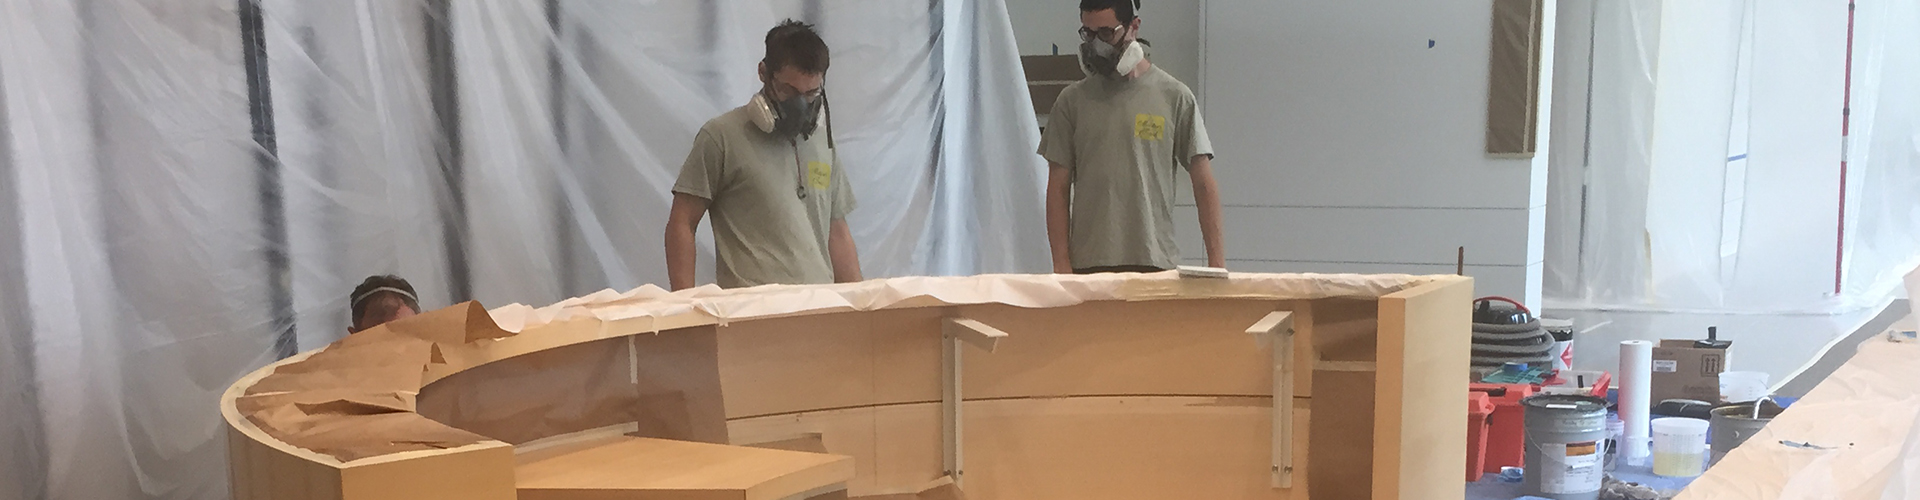 Men working on wooden furniture